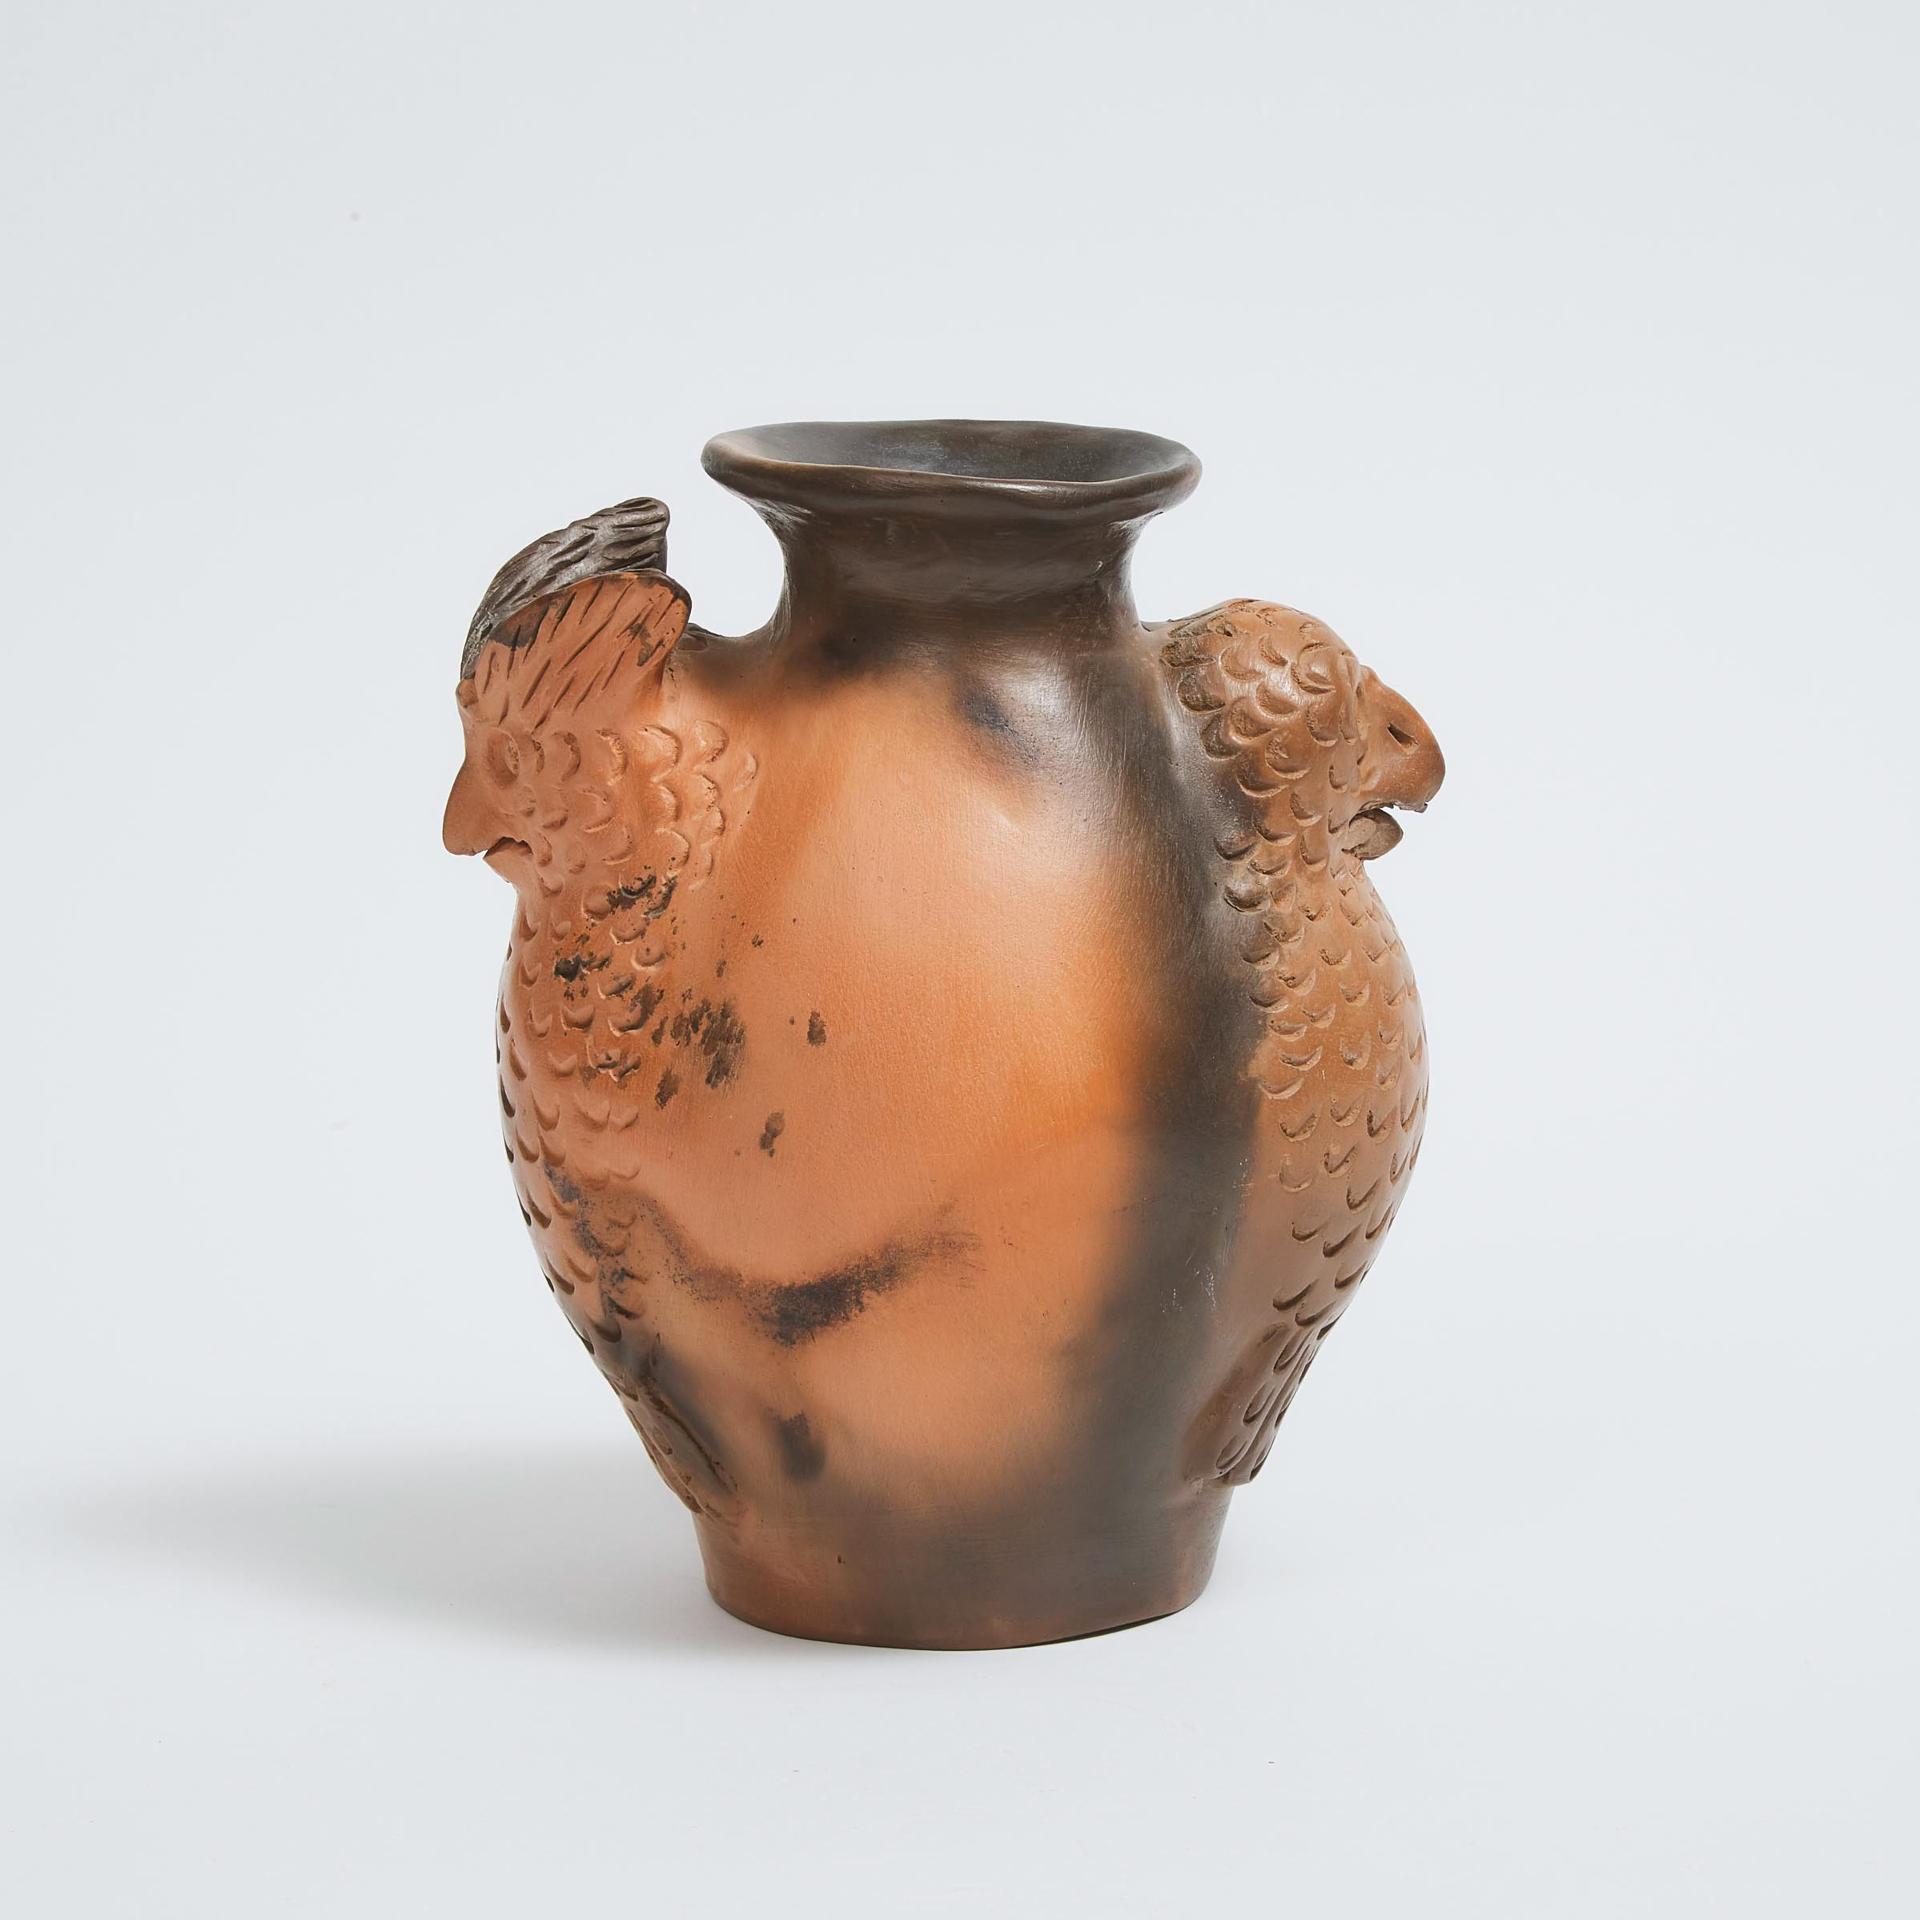 Evoo Samgusak Mangelik (1942) - Vase Decorated With Opposing Birds